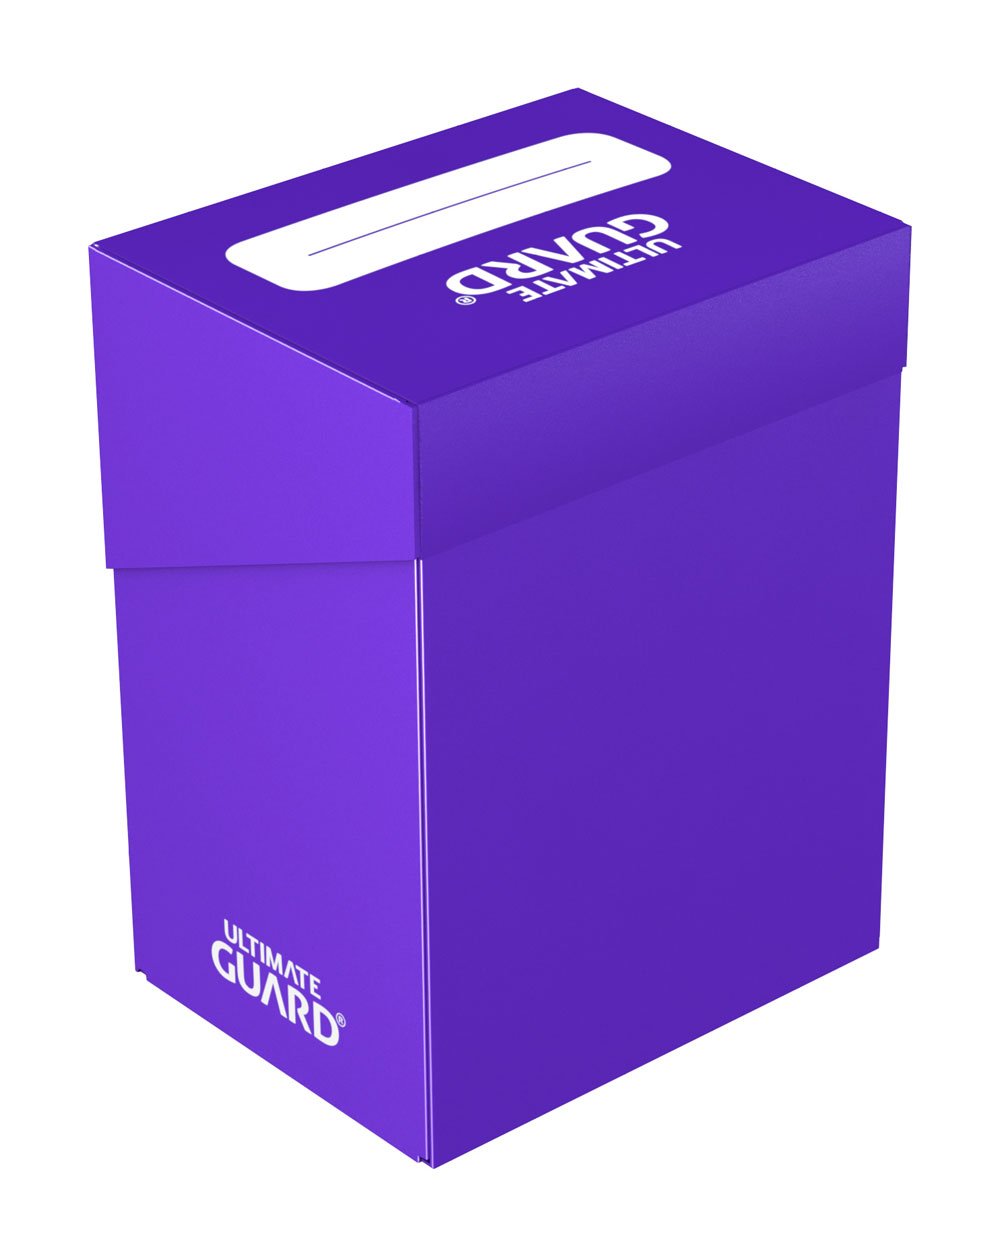 Caja Ultimate Guard Deck Case 80+ Caja de Cartas Tamaño Estándar Violeta